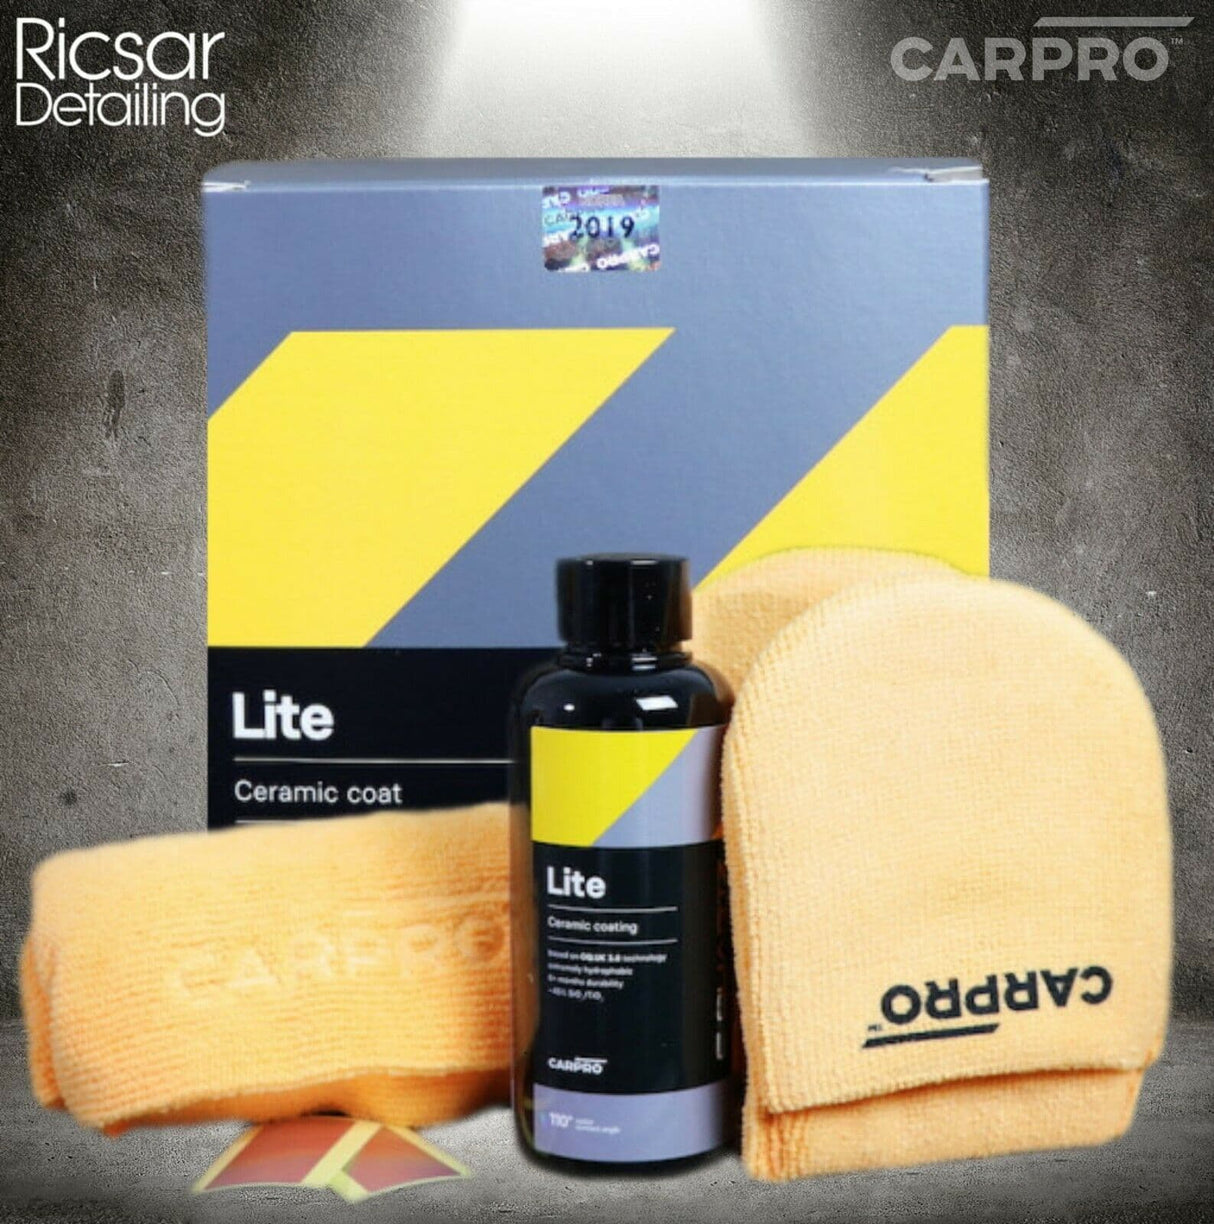 CarPro Cquartz Lite 150ml Kit - Entry Level Cquartz Ceramic Coating!